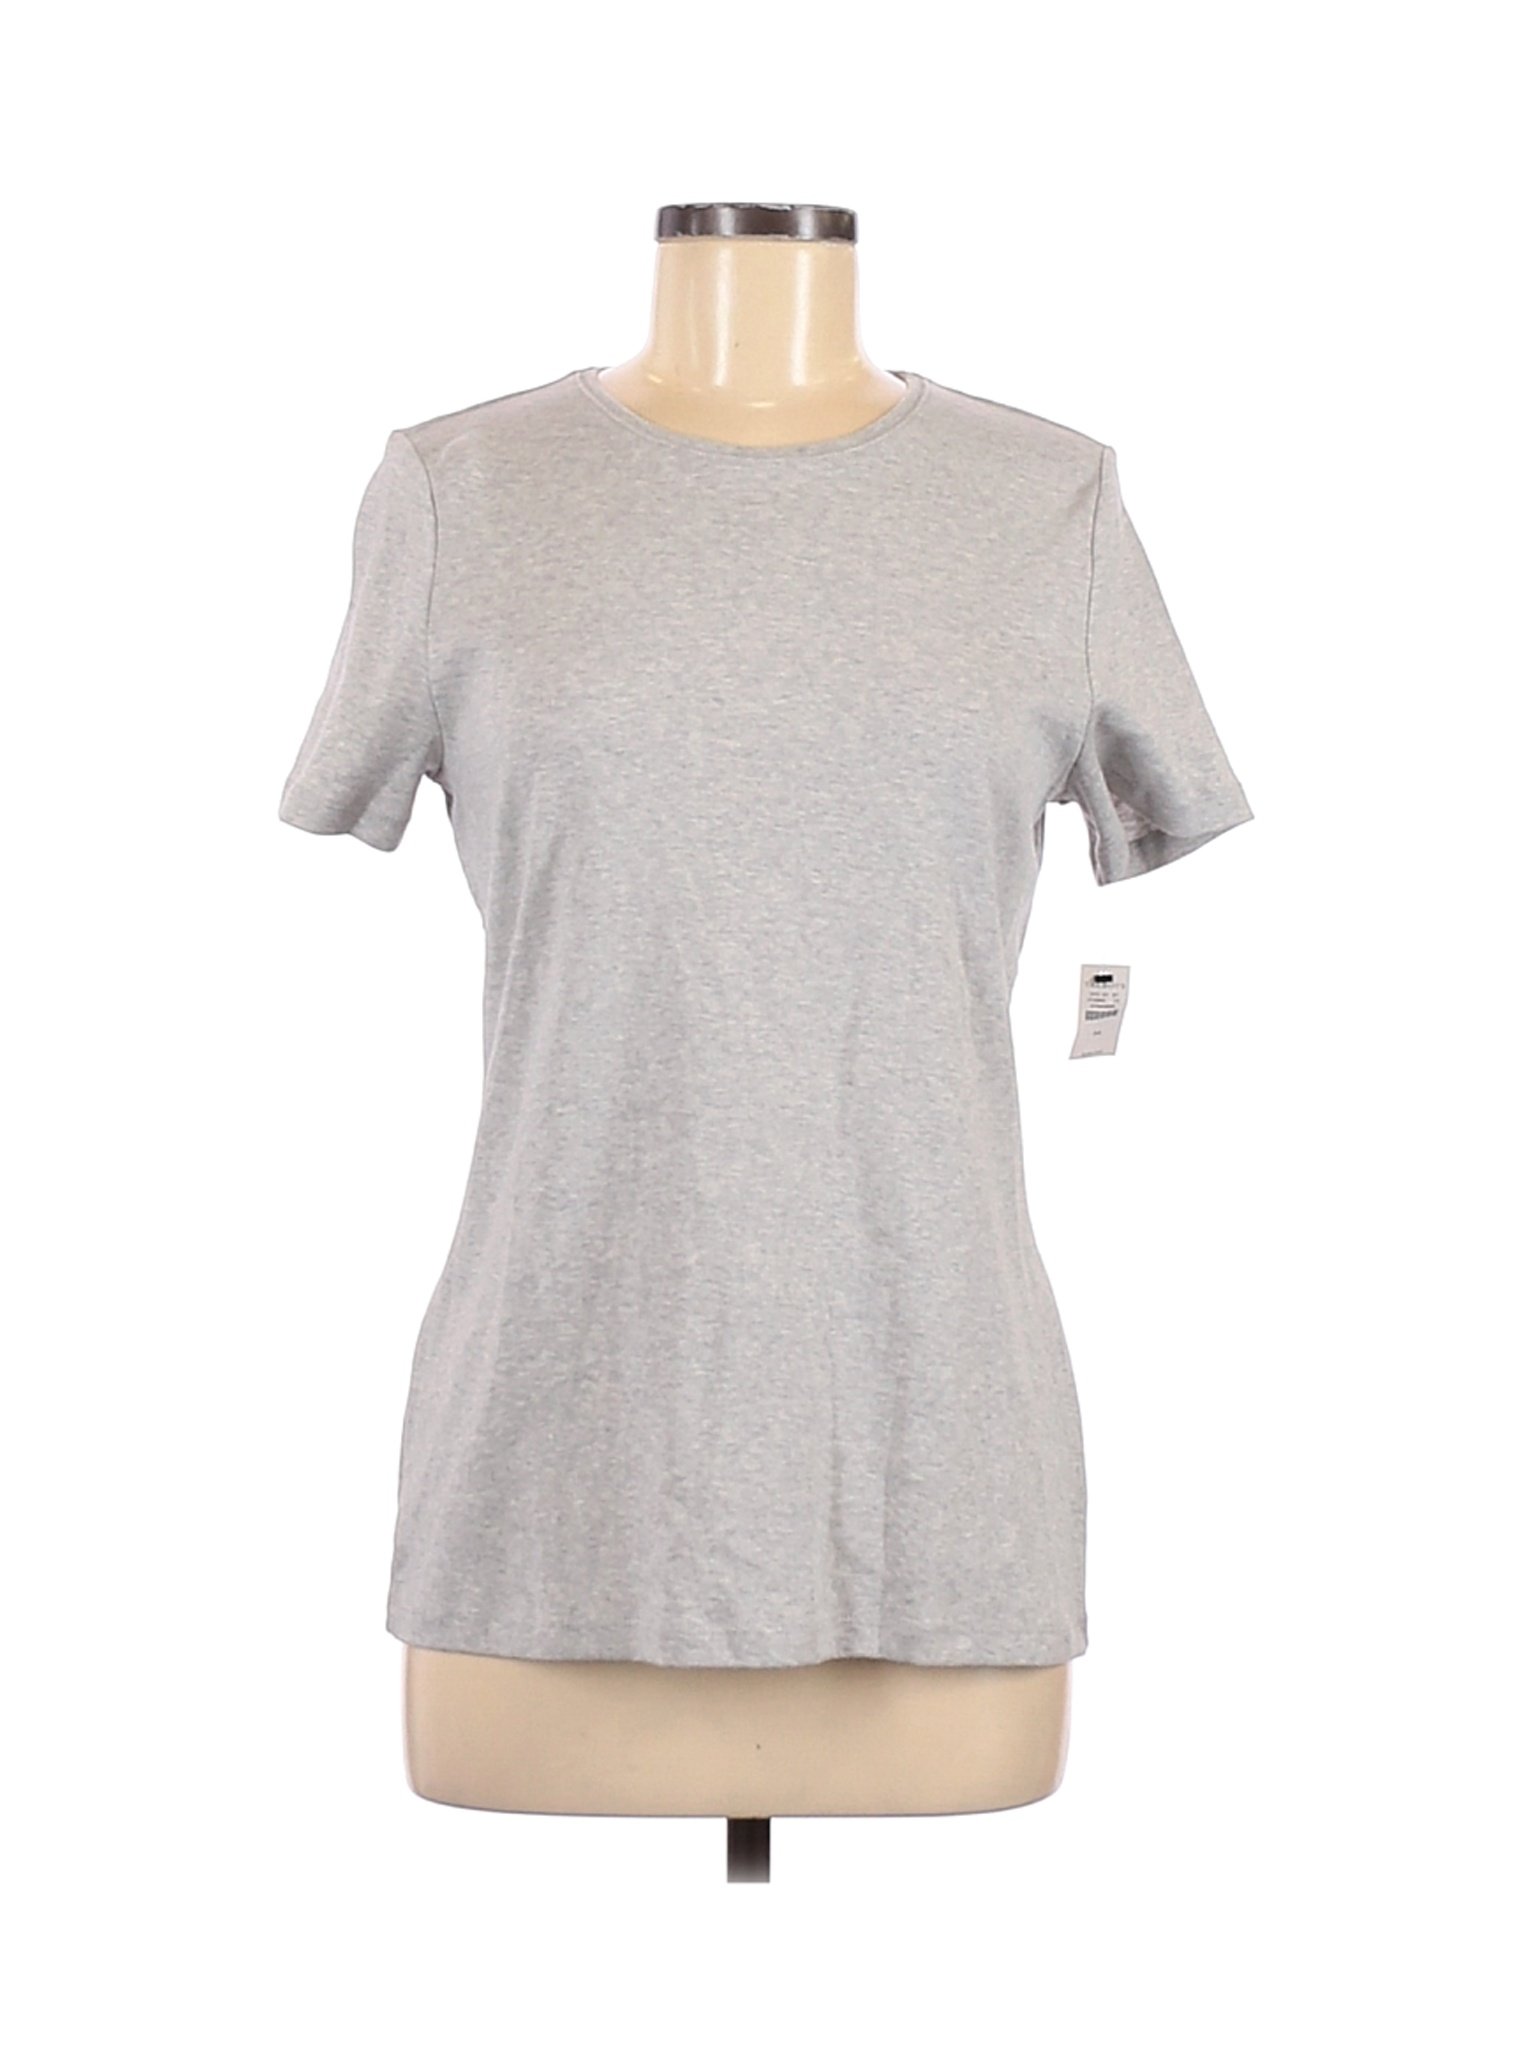 NWT Talbots Women Gray Short Sleeve T-Shirt M | eBay